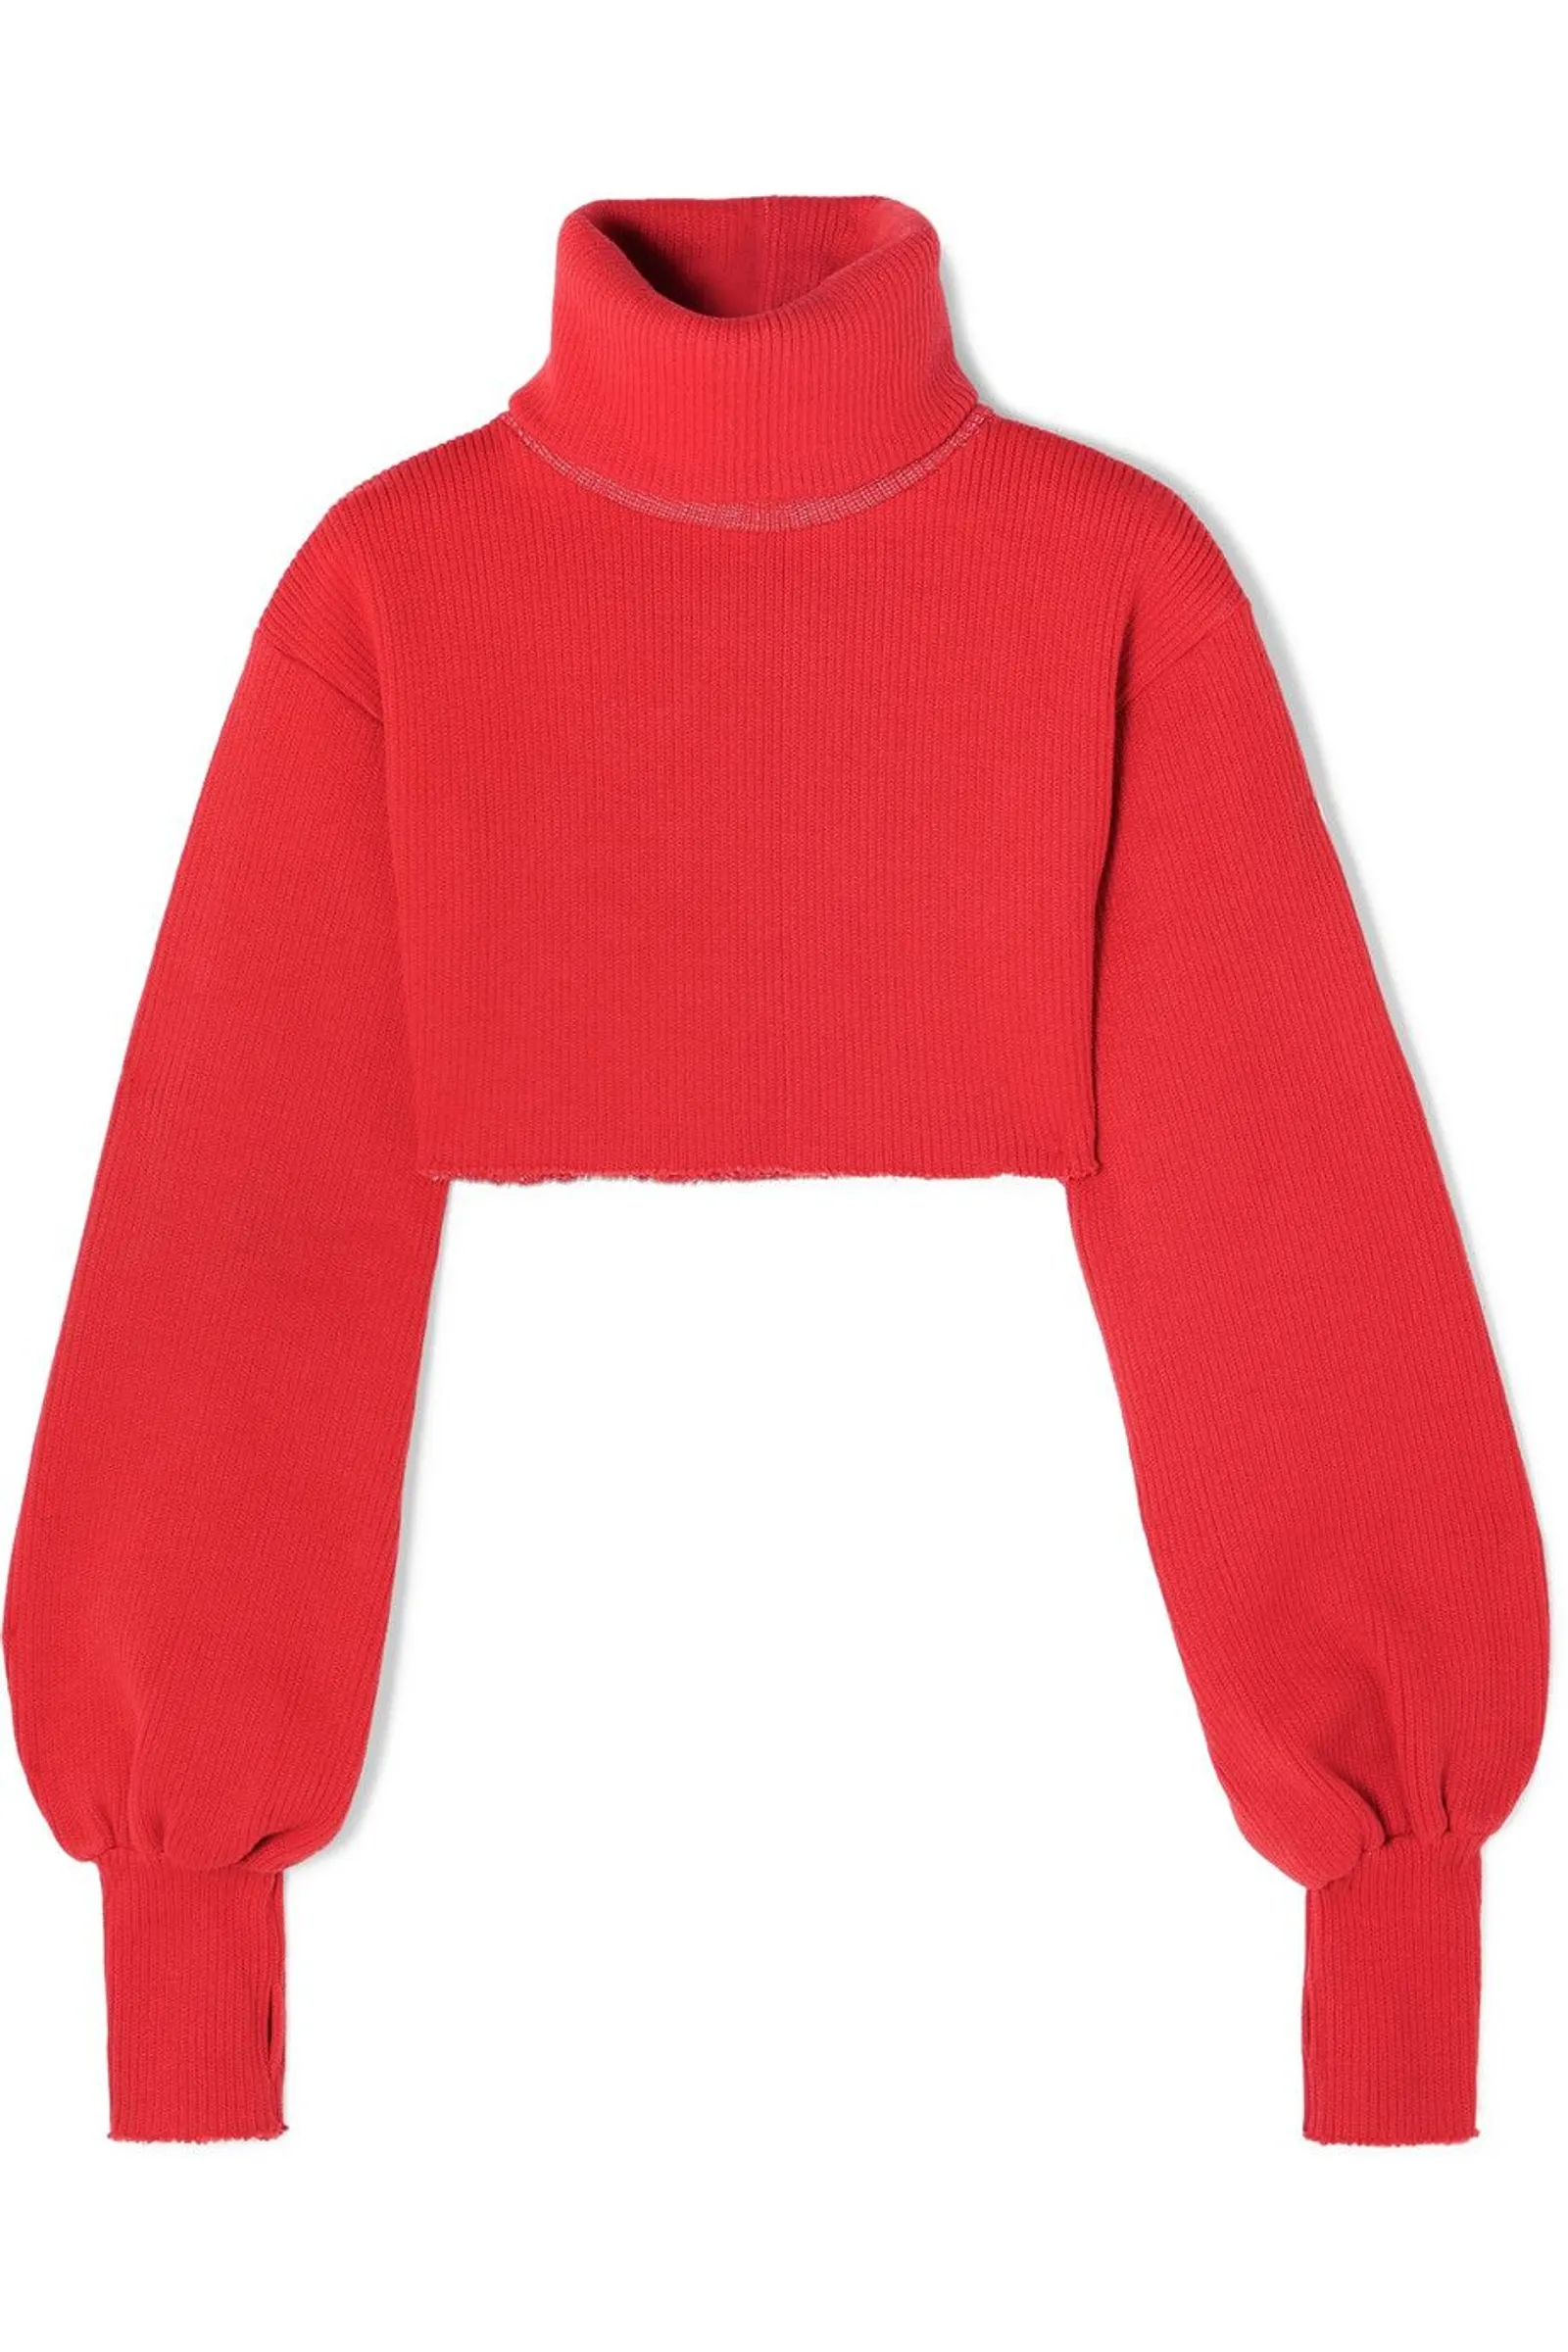 #PopbelaOOTD: Kece Memakai Sweater Unik 